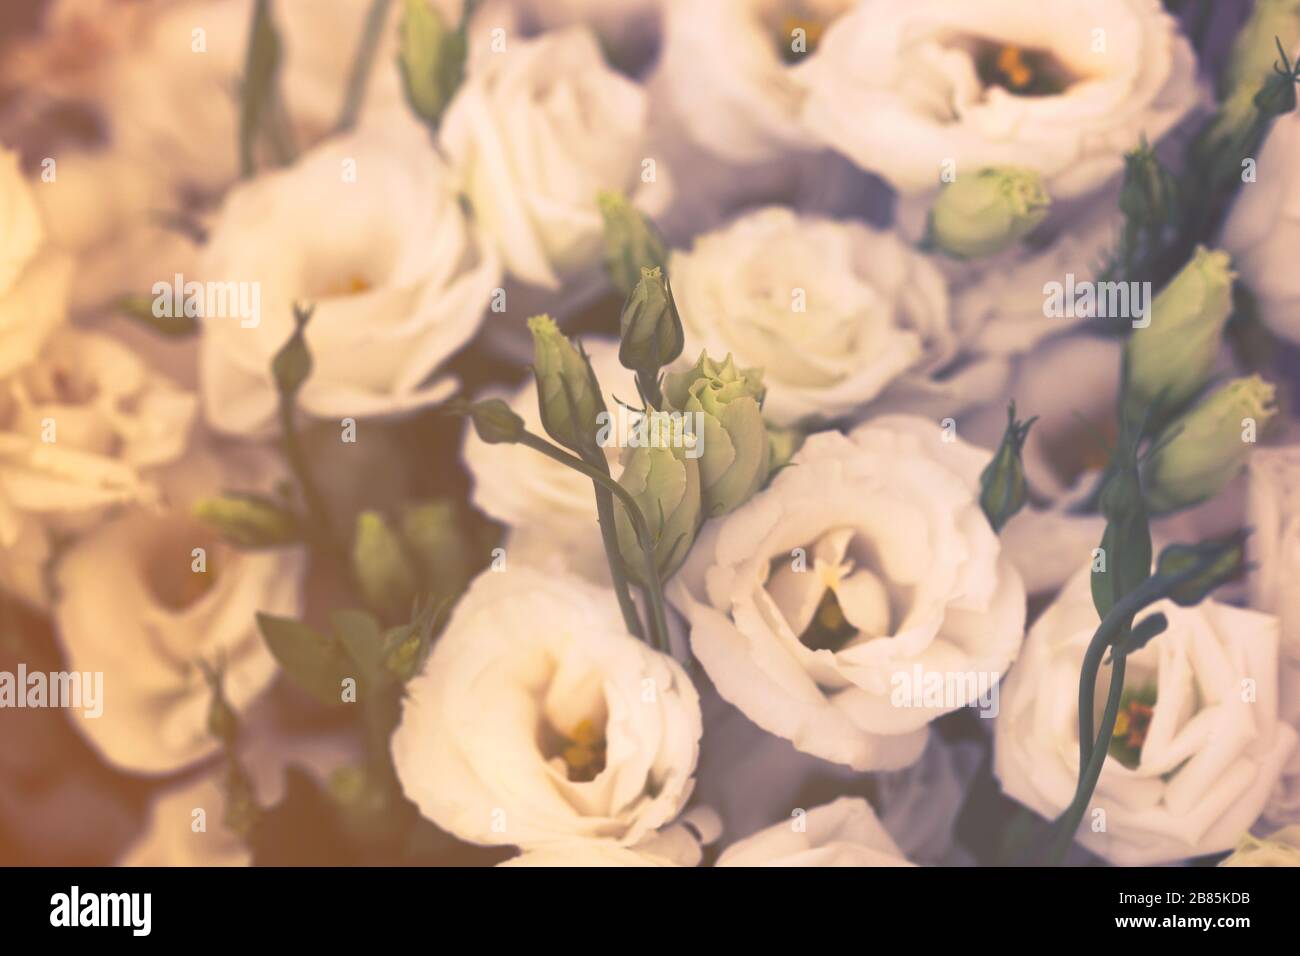 Weiße schöne Eustoma-Blumen (Lisianthus, Tulpengentian, Eustomas) Hintergrund. Vintage-Stil. Stockfoto